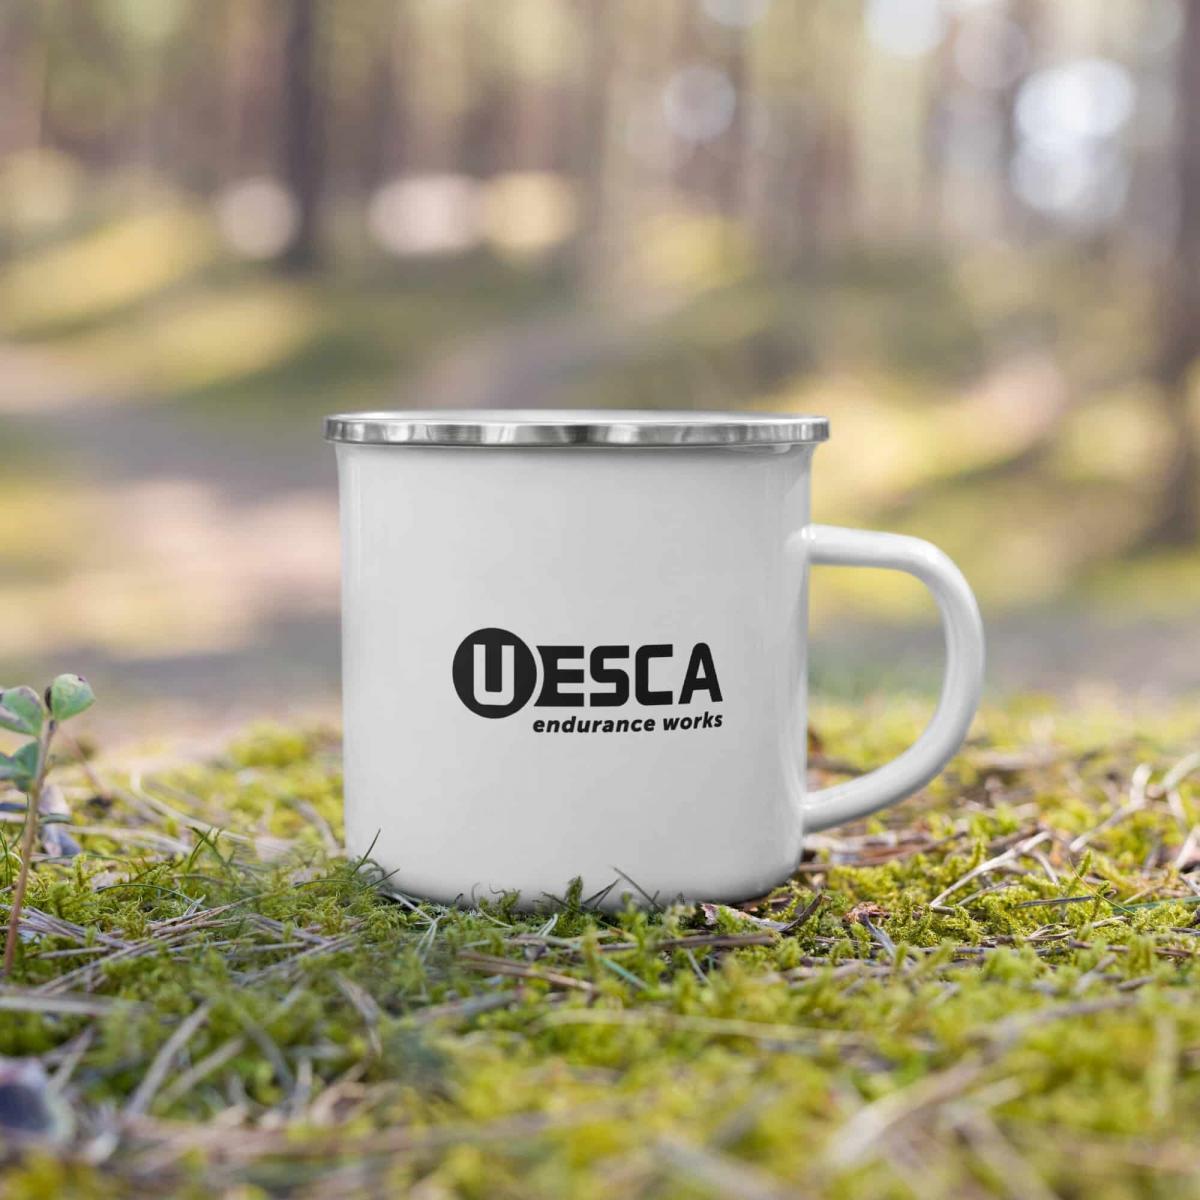 UESCA Endurance Works Enamel Mug